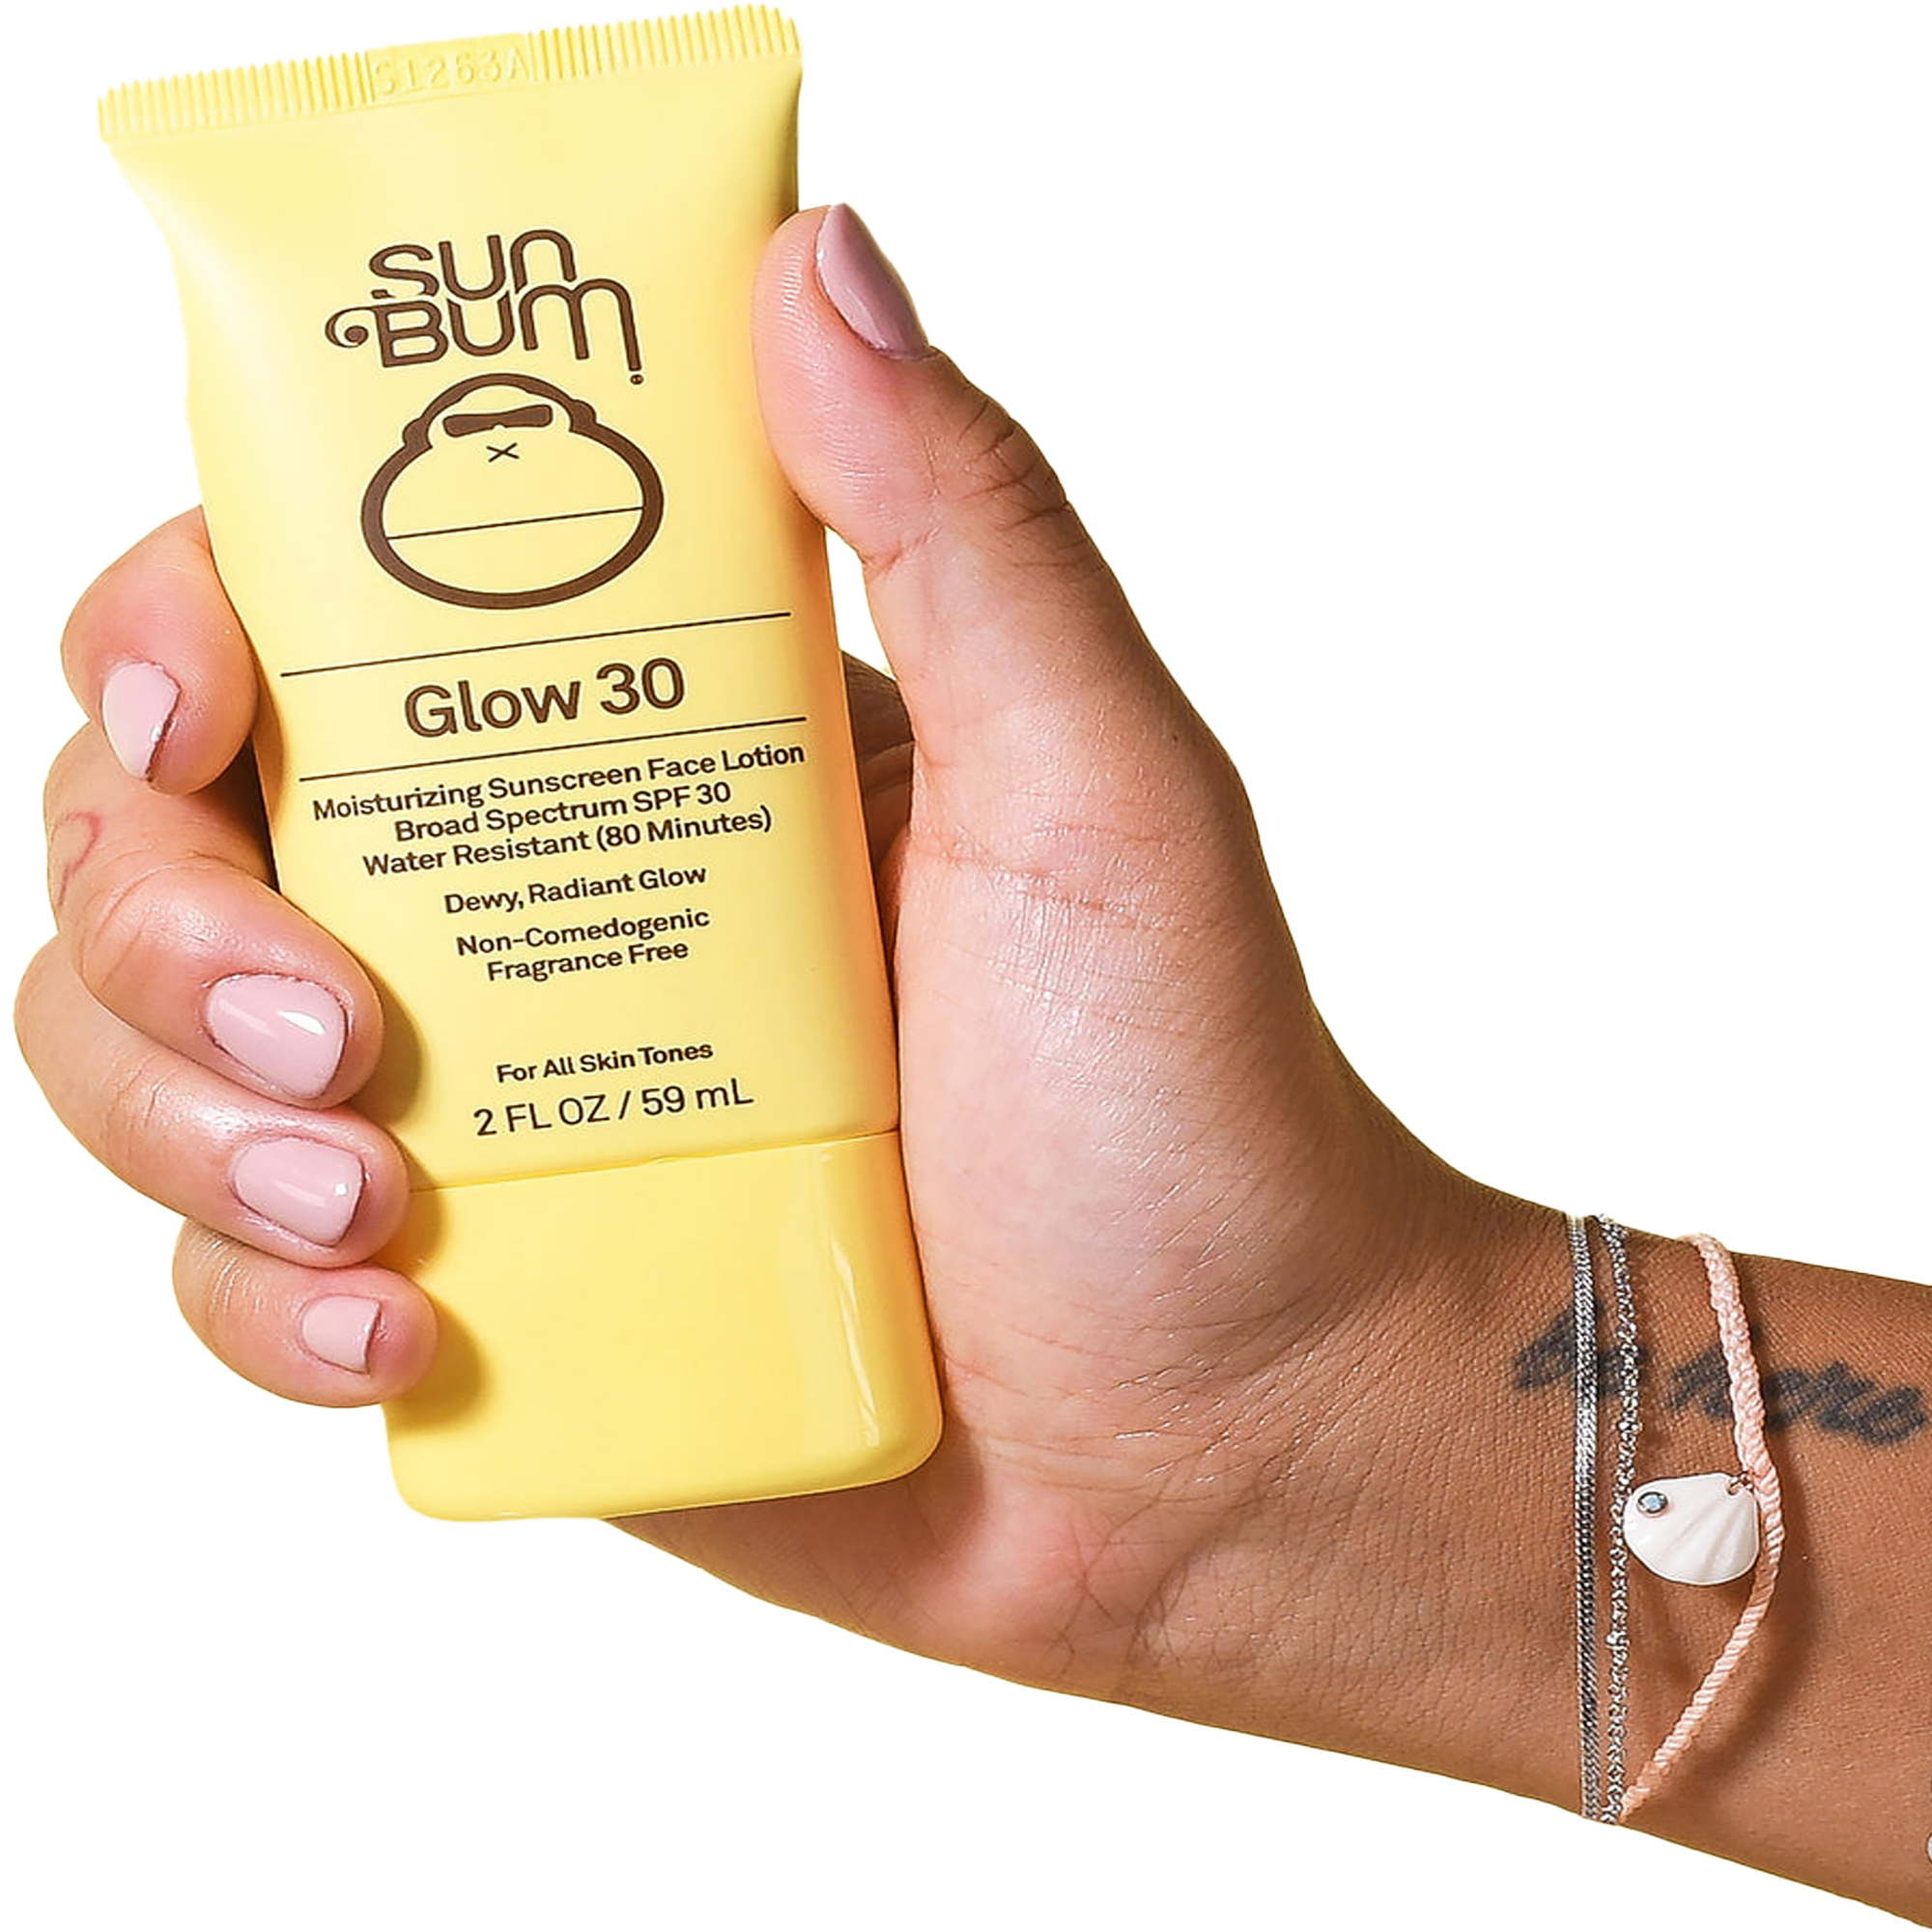 Sun Bum Original Glow Sunscreen Face Lotion Cream